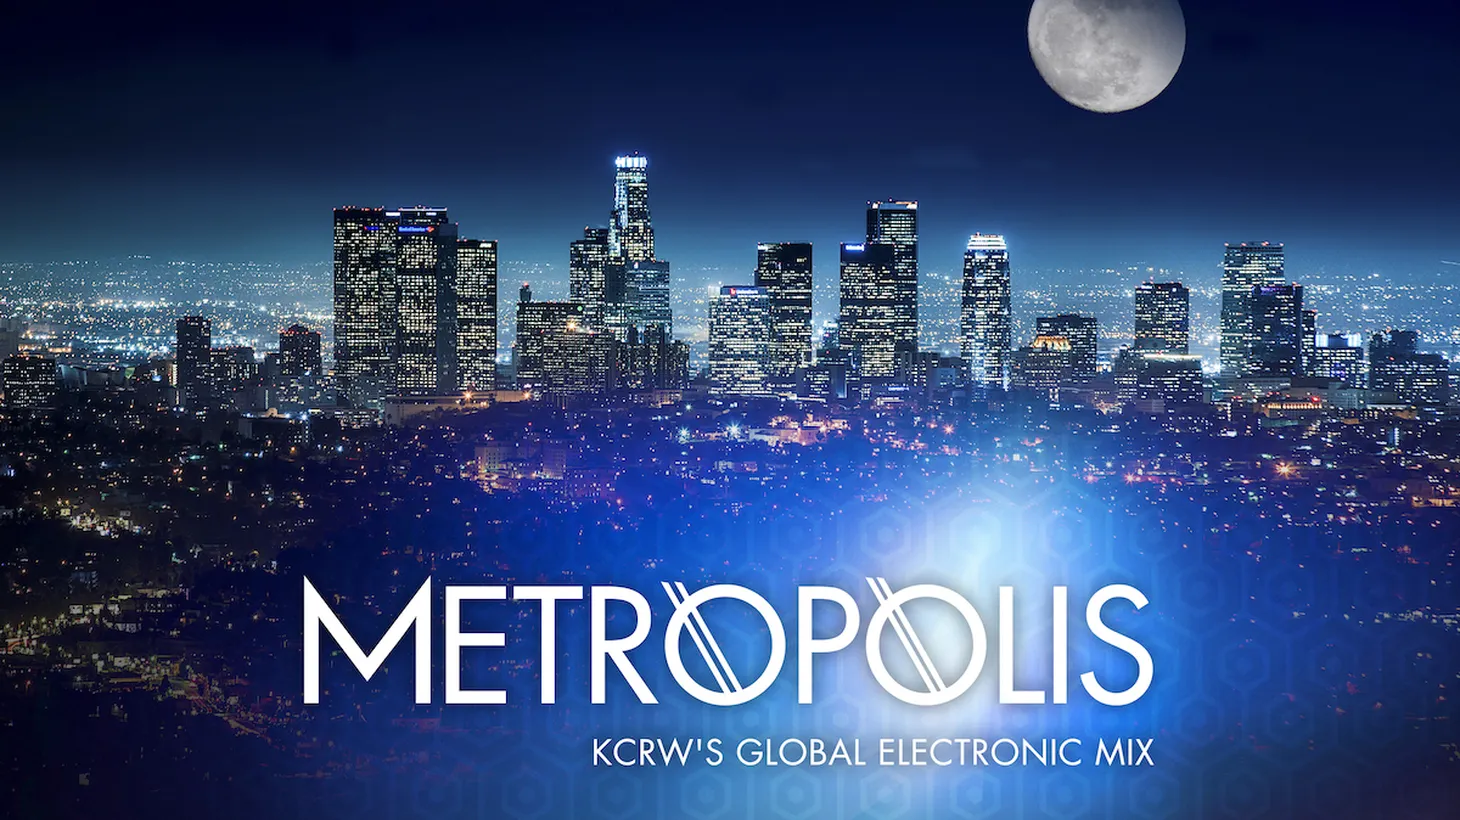 Metropolis playlist, March 6, 2021.